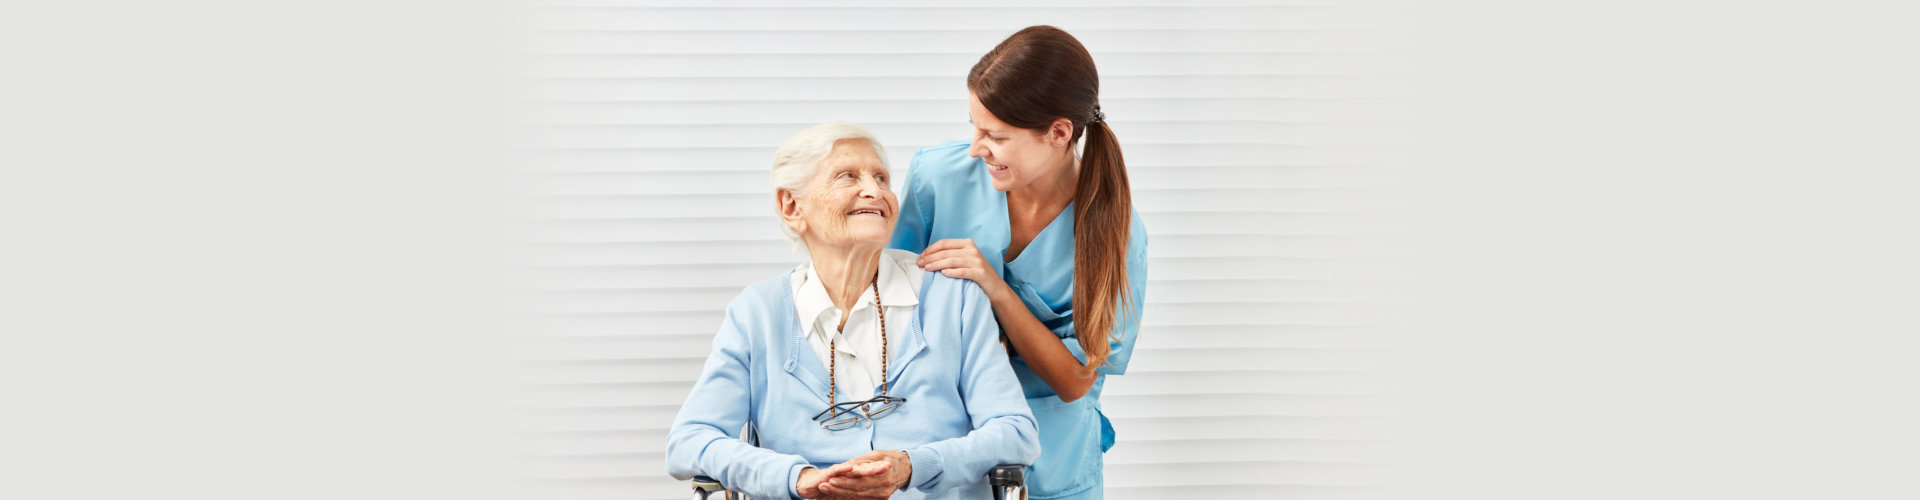 Smiling senior citizen in wheelchair and nurse